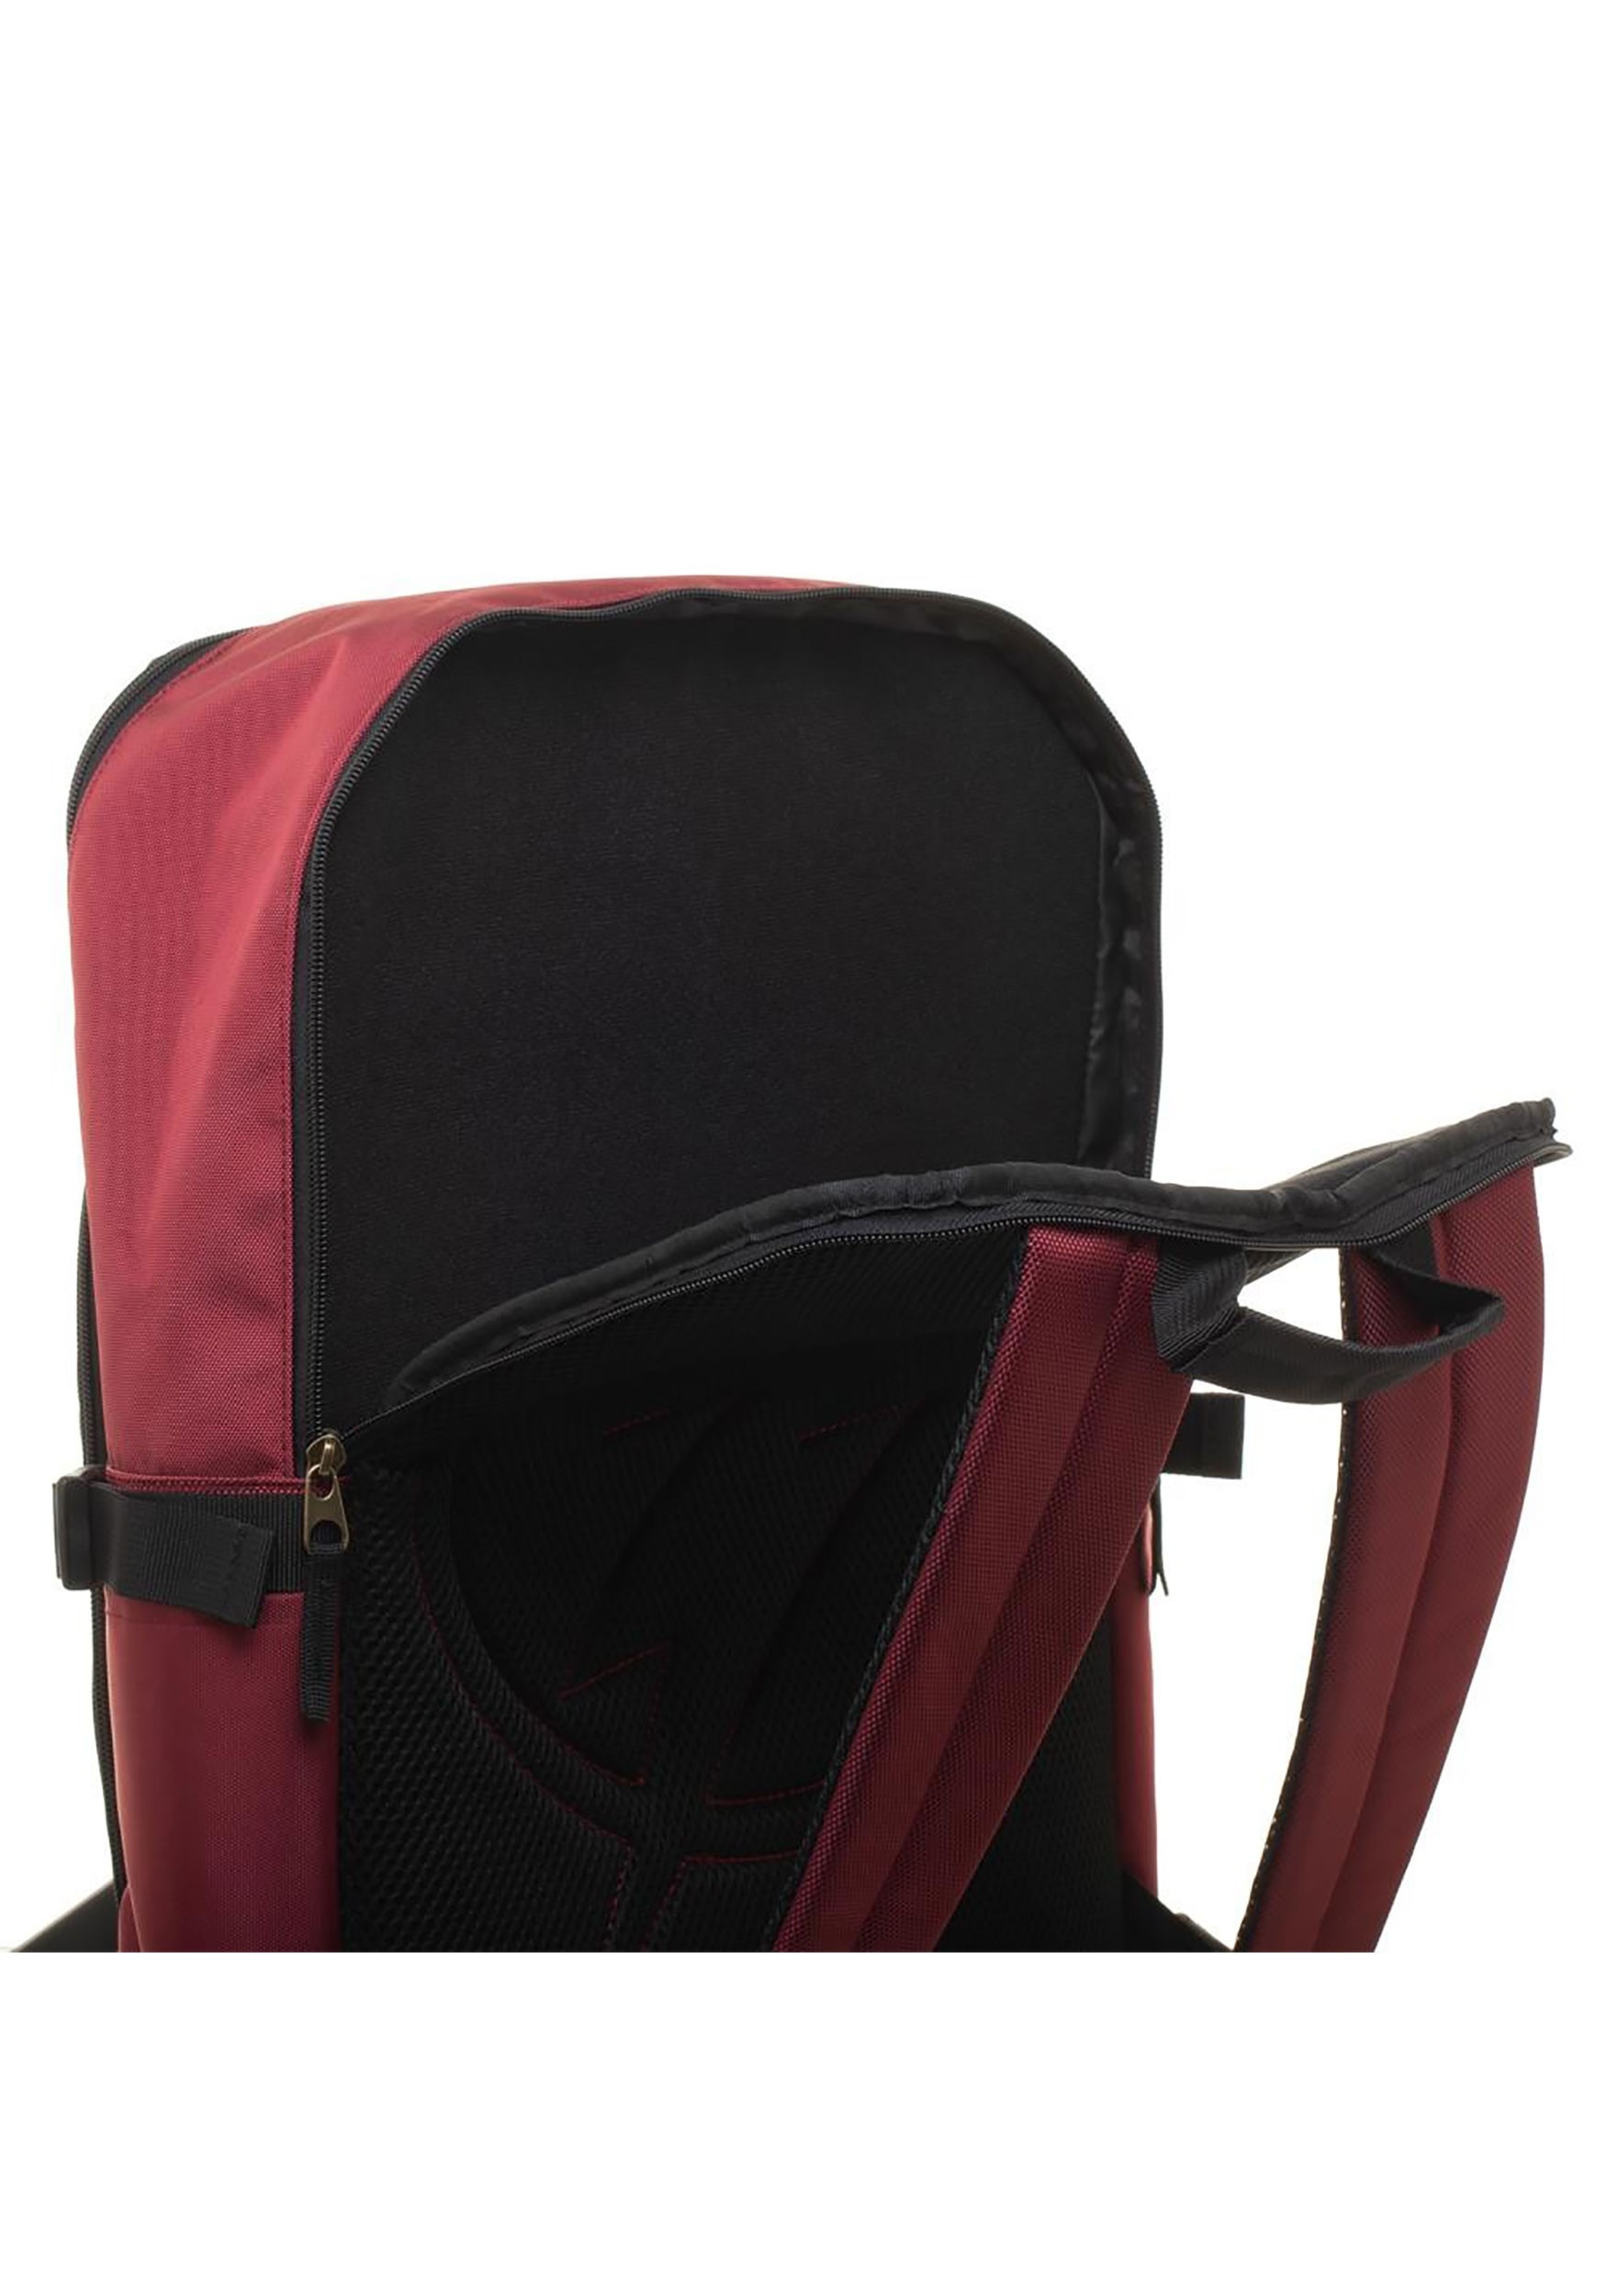 dc flash backpack